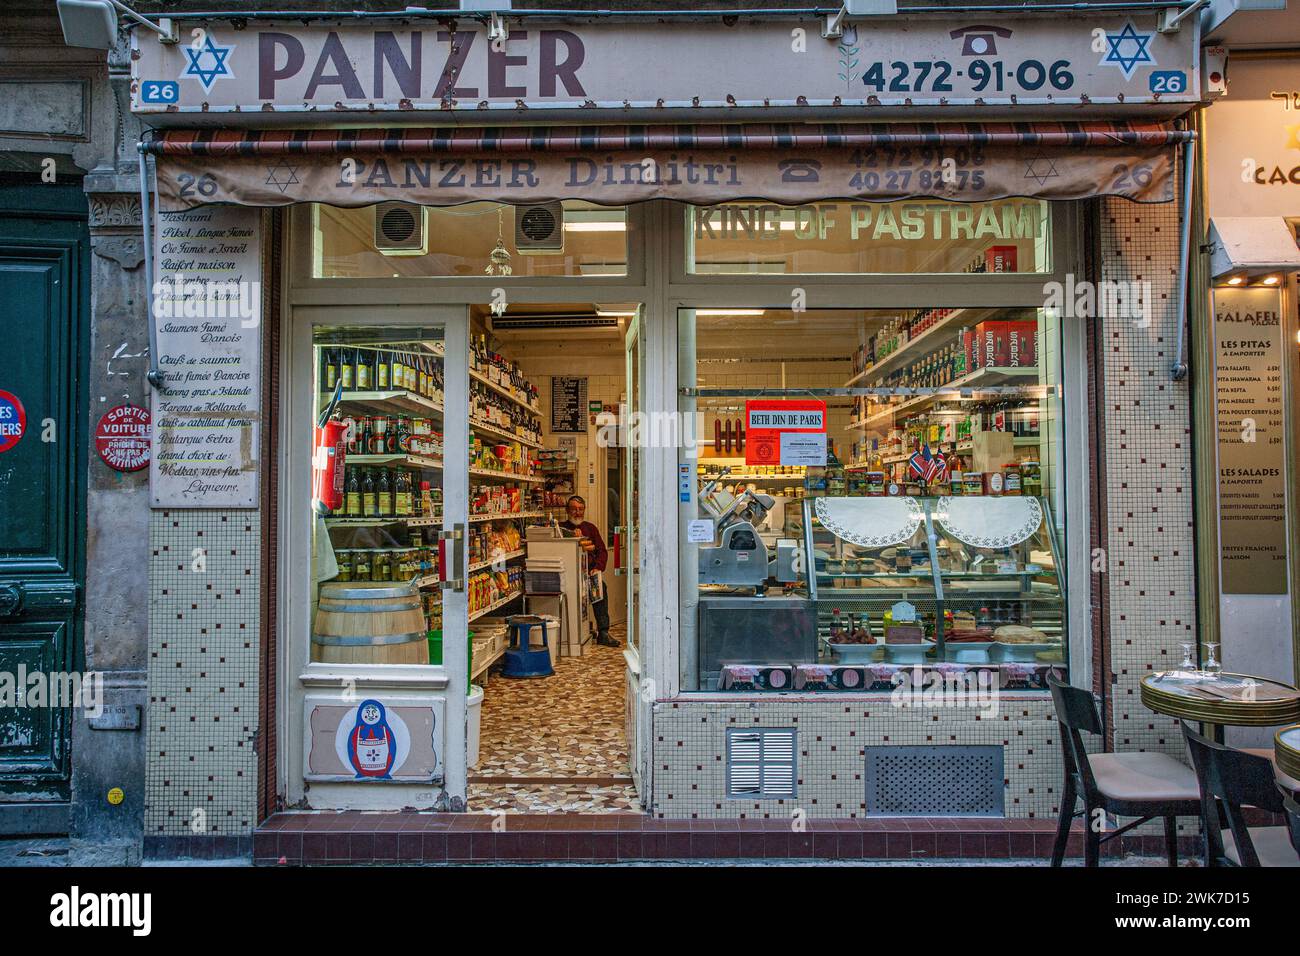 Marais old Jewish quarter Paris Panzer King of Pastrami Panzer Ashkenazi community best Jewish deli France Stock Photo